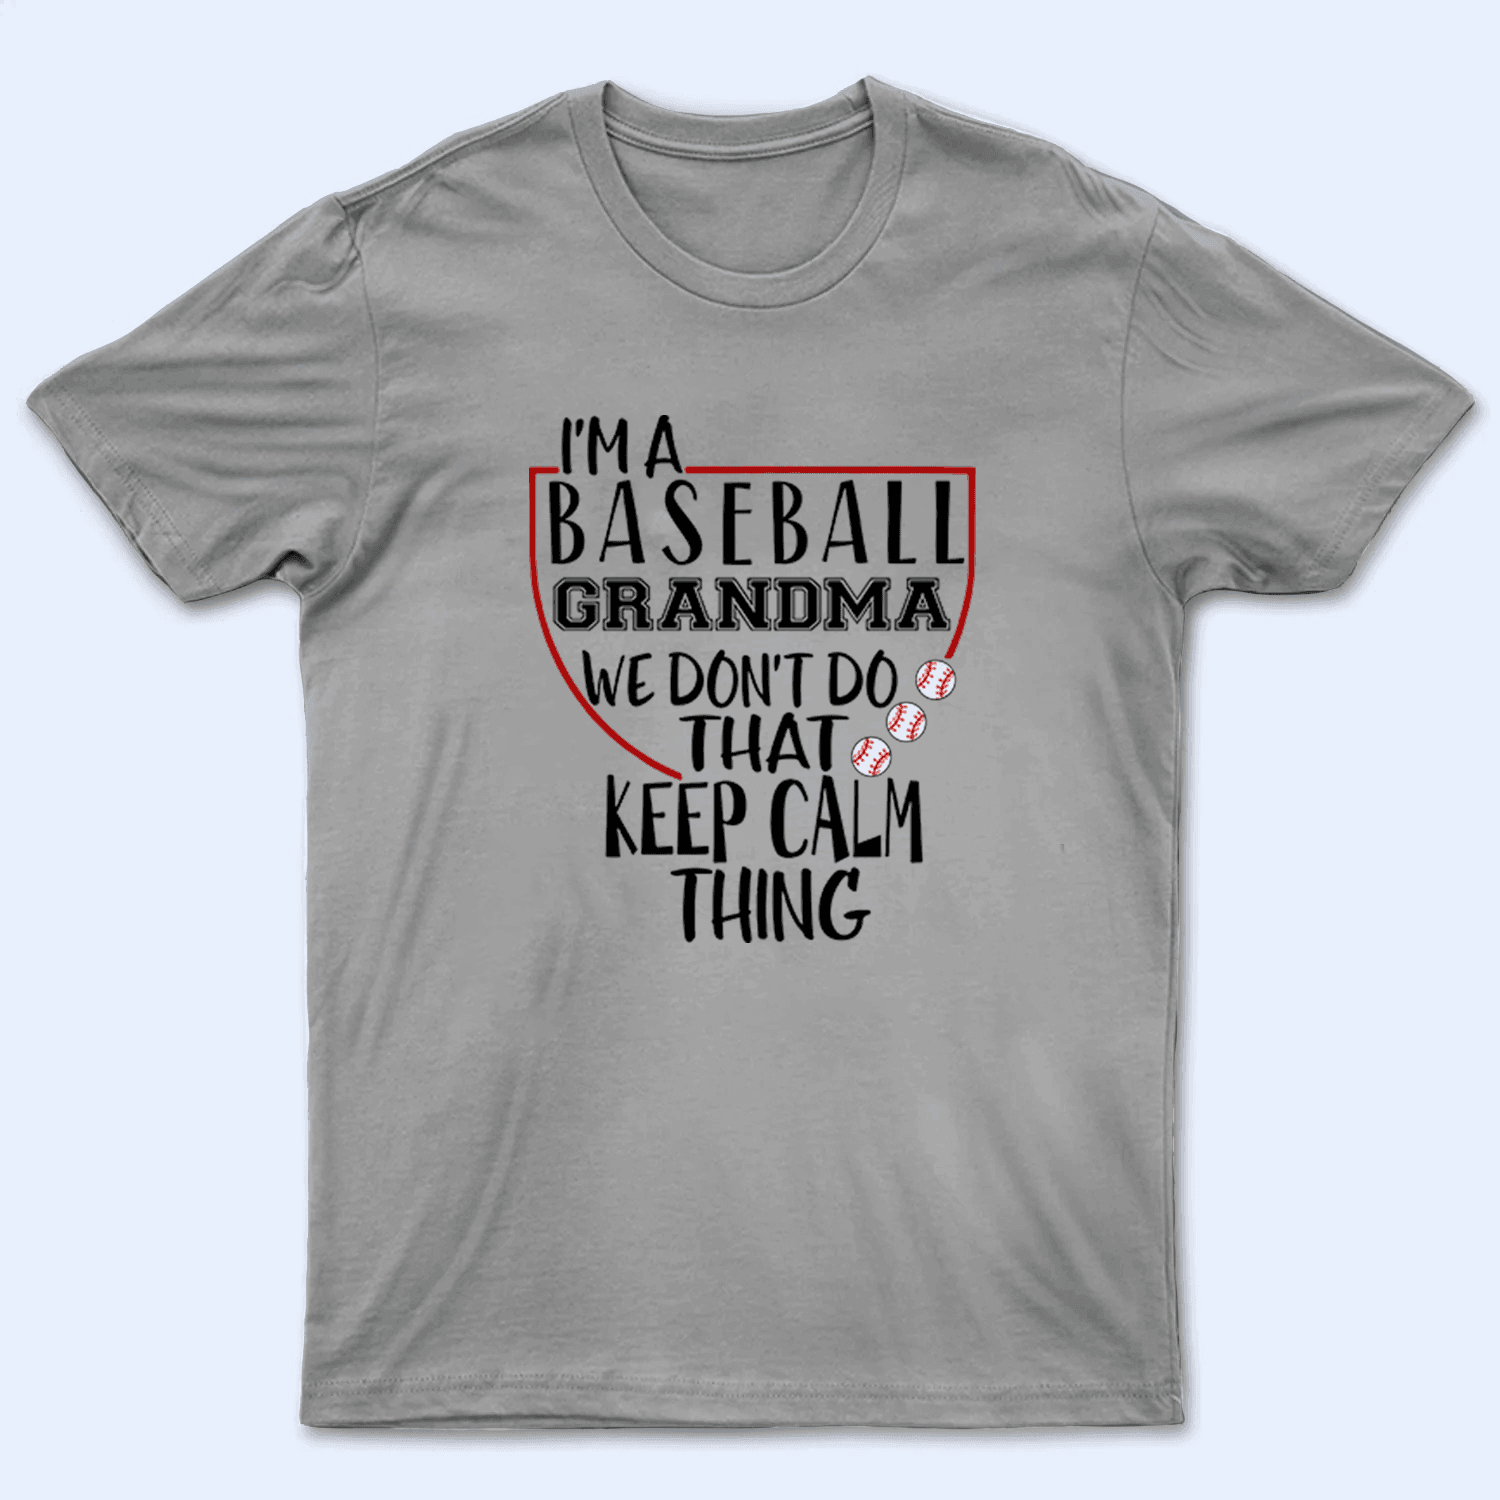 We don't do that keep calm thing - Baseball/Softball - Personalized Custom T Shirt - Gift for Grandma/Nana/Mimi, Mom, Wife, Grandparent - Suzitee Store